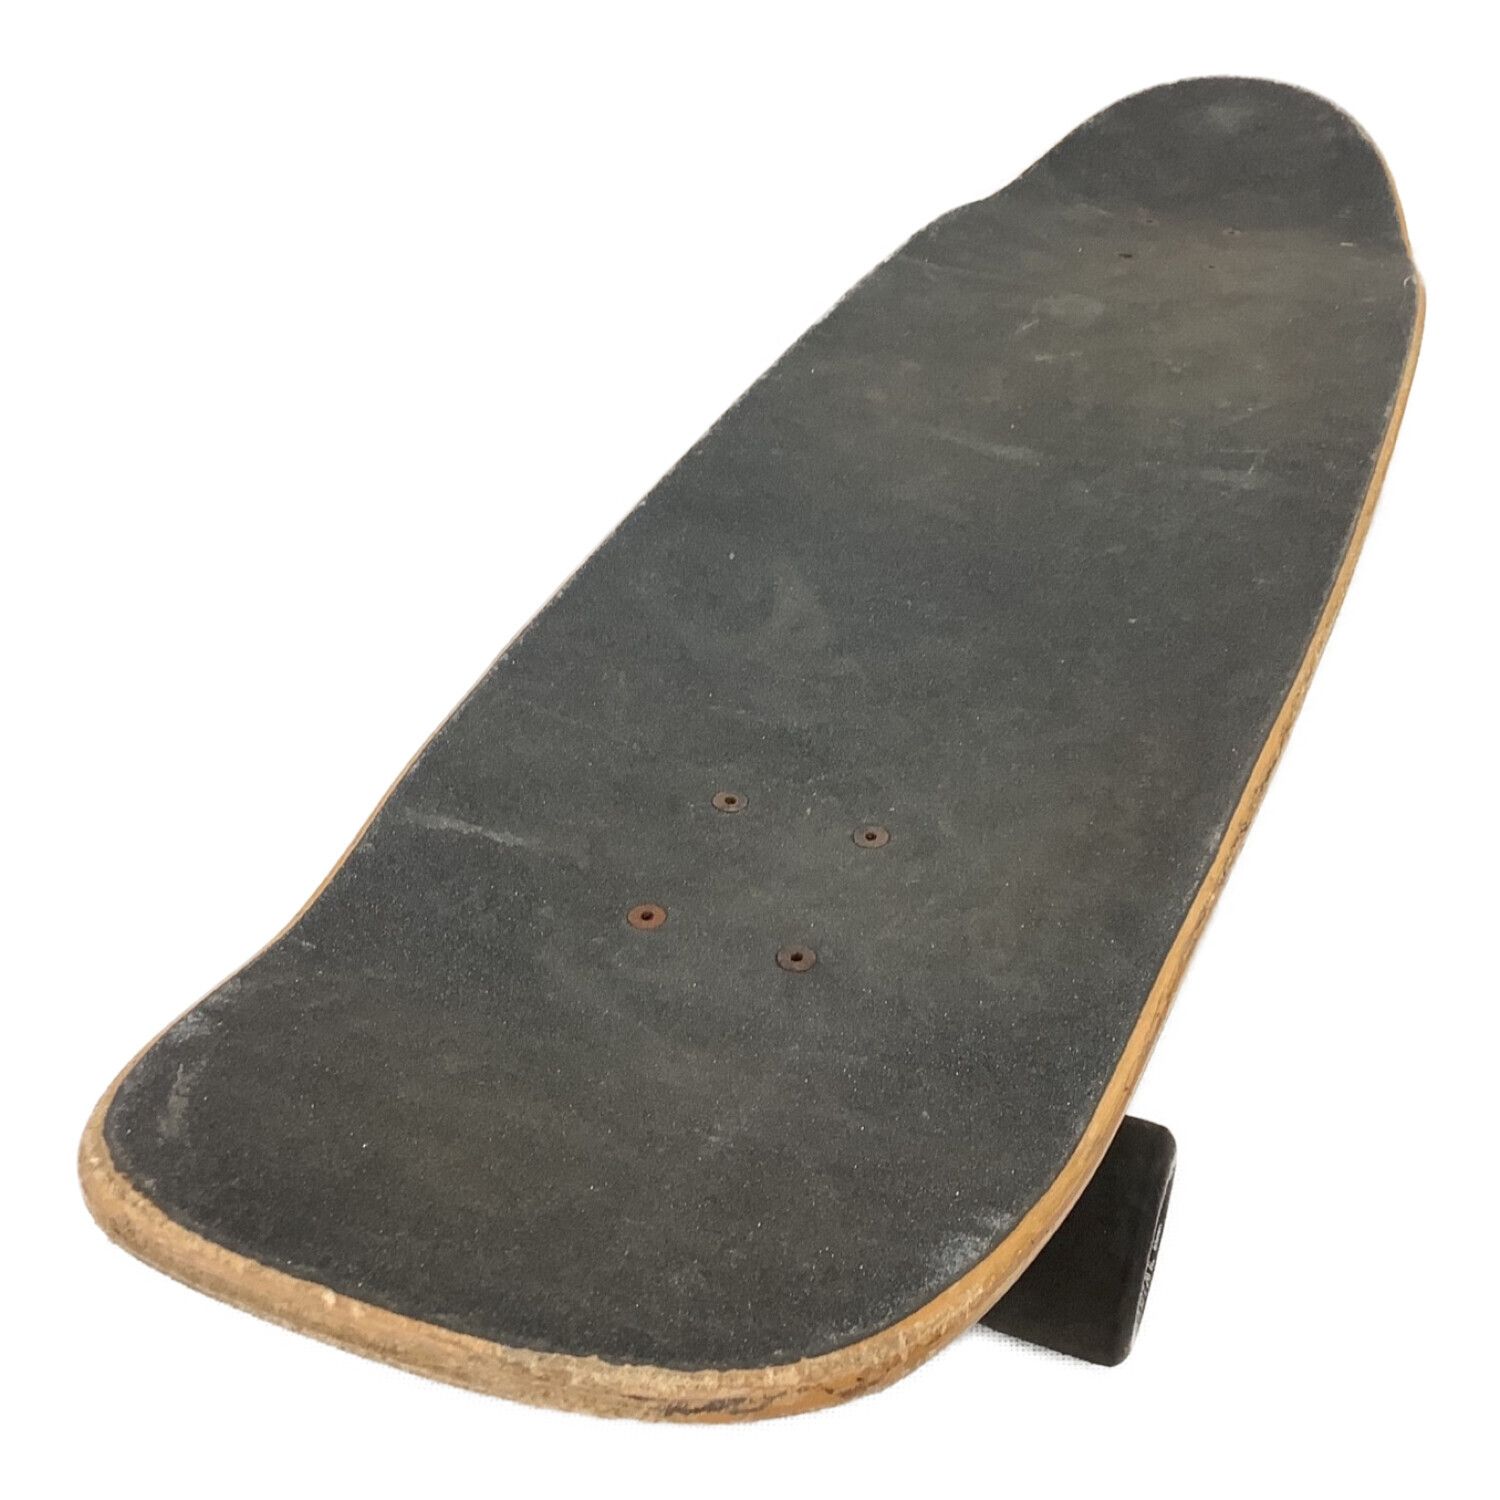 CARVER (カーバー) スケートボード ブラック×ホワイト sk8boards